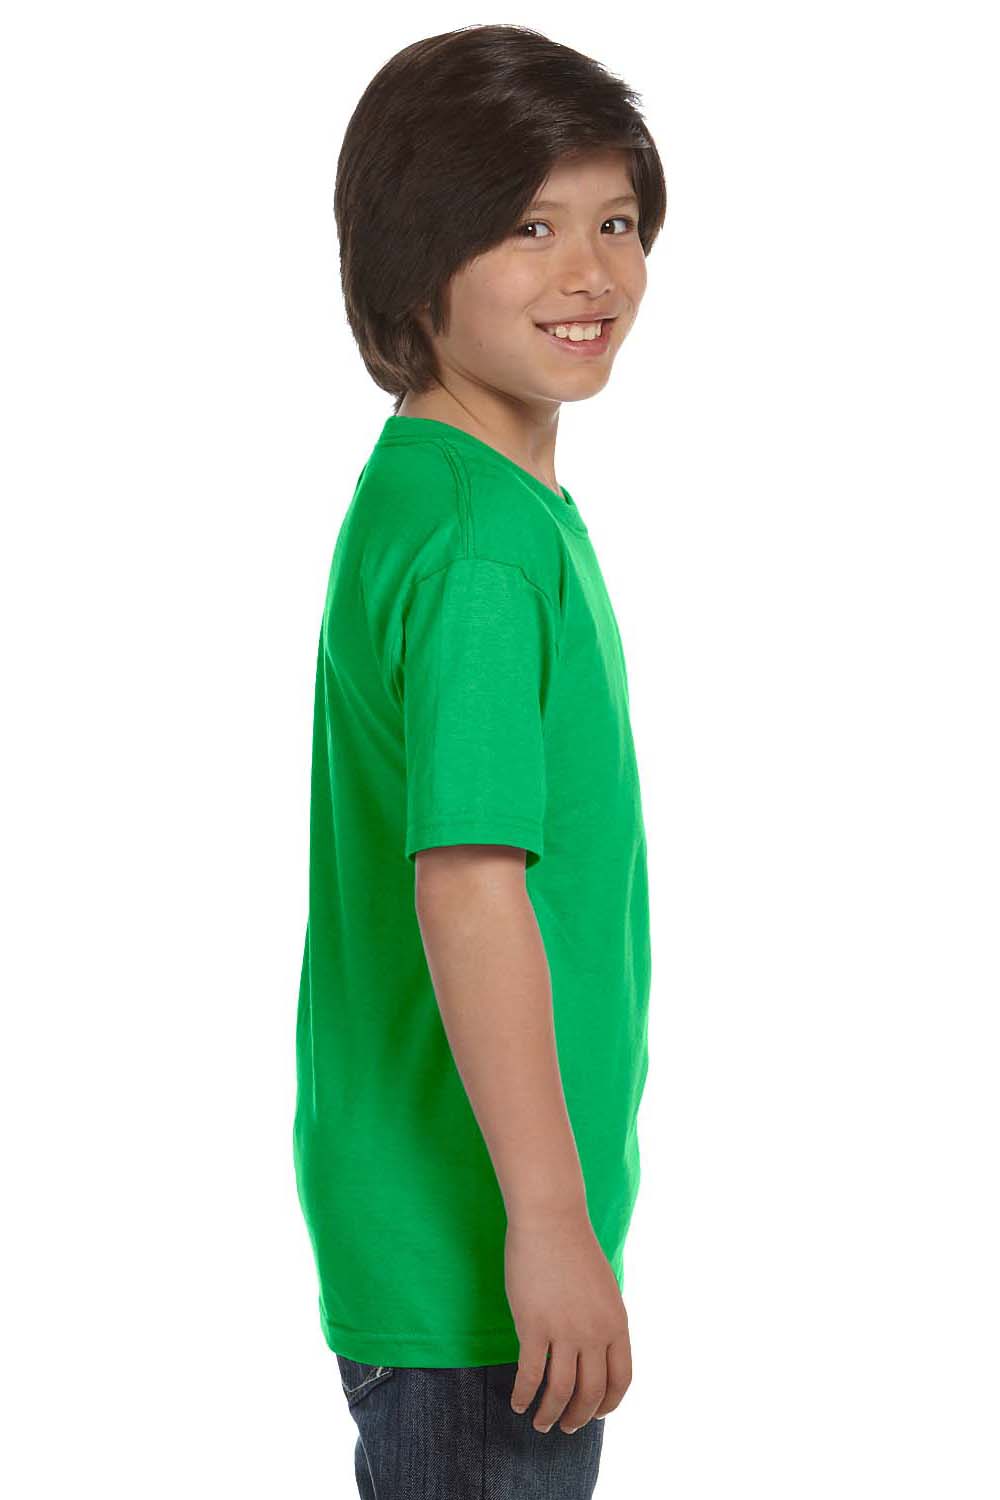 Gildan G800B Youth DryBlend Moisture Wicking Short Sleeve Crewneck T-Shirt Electric Green Side